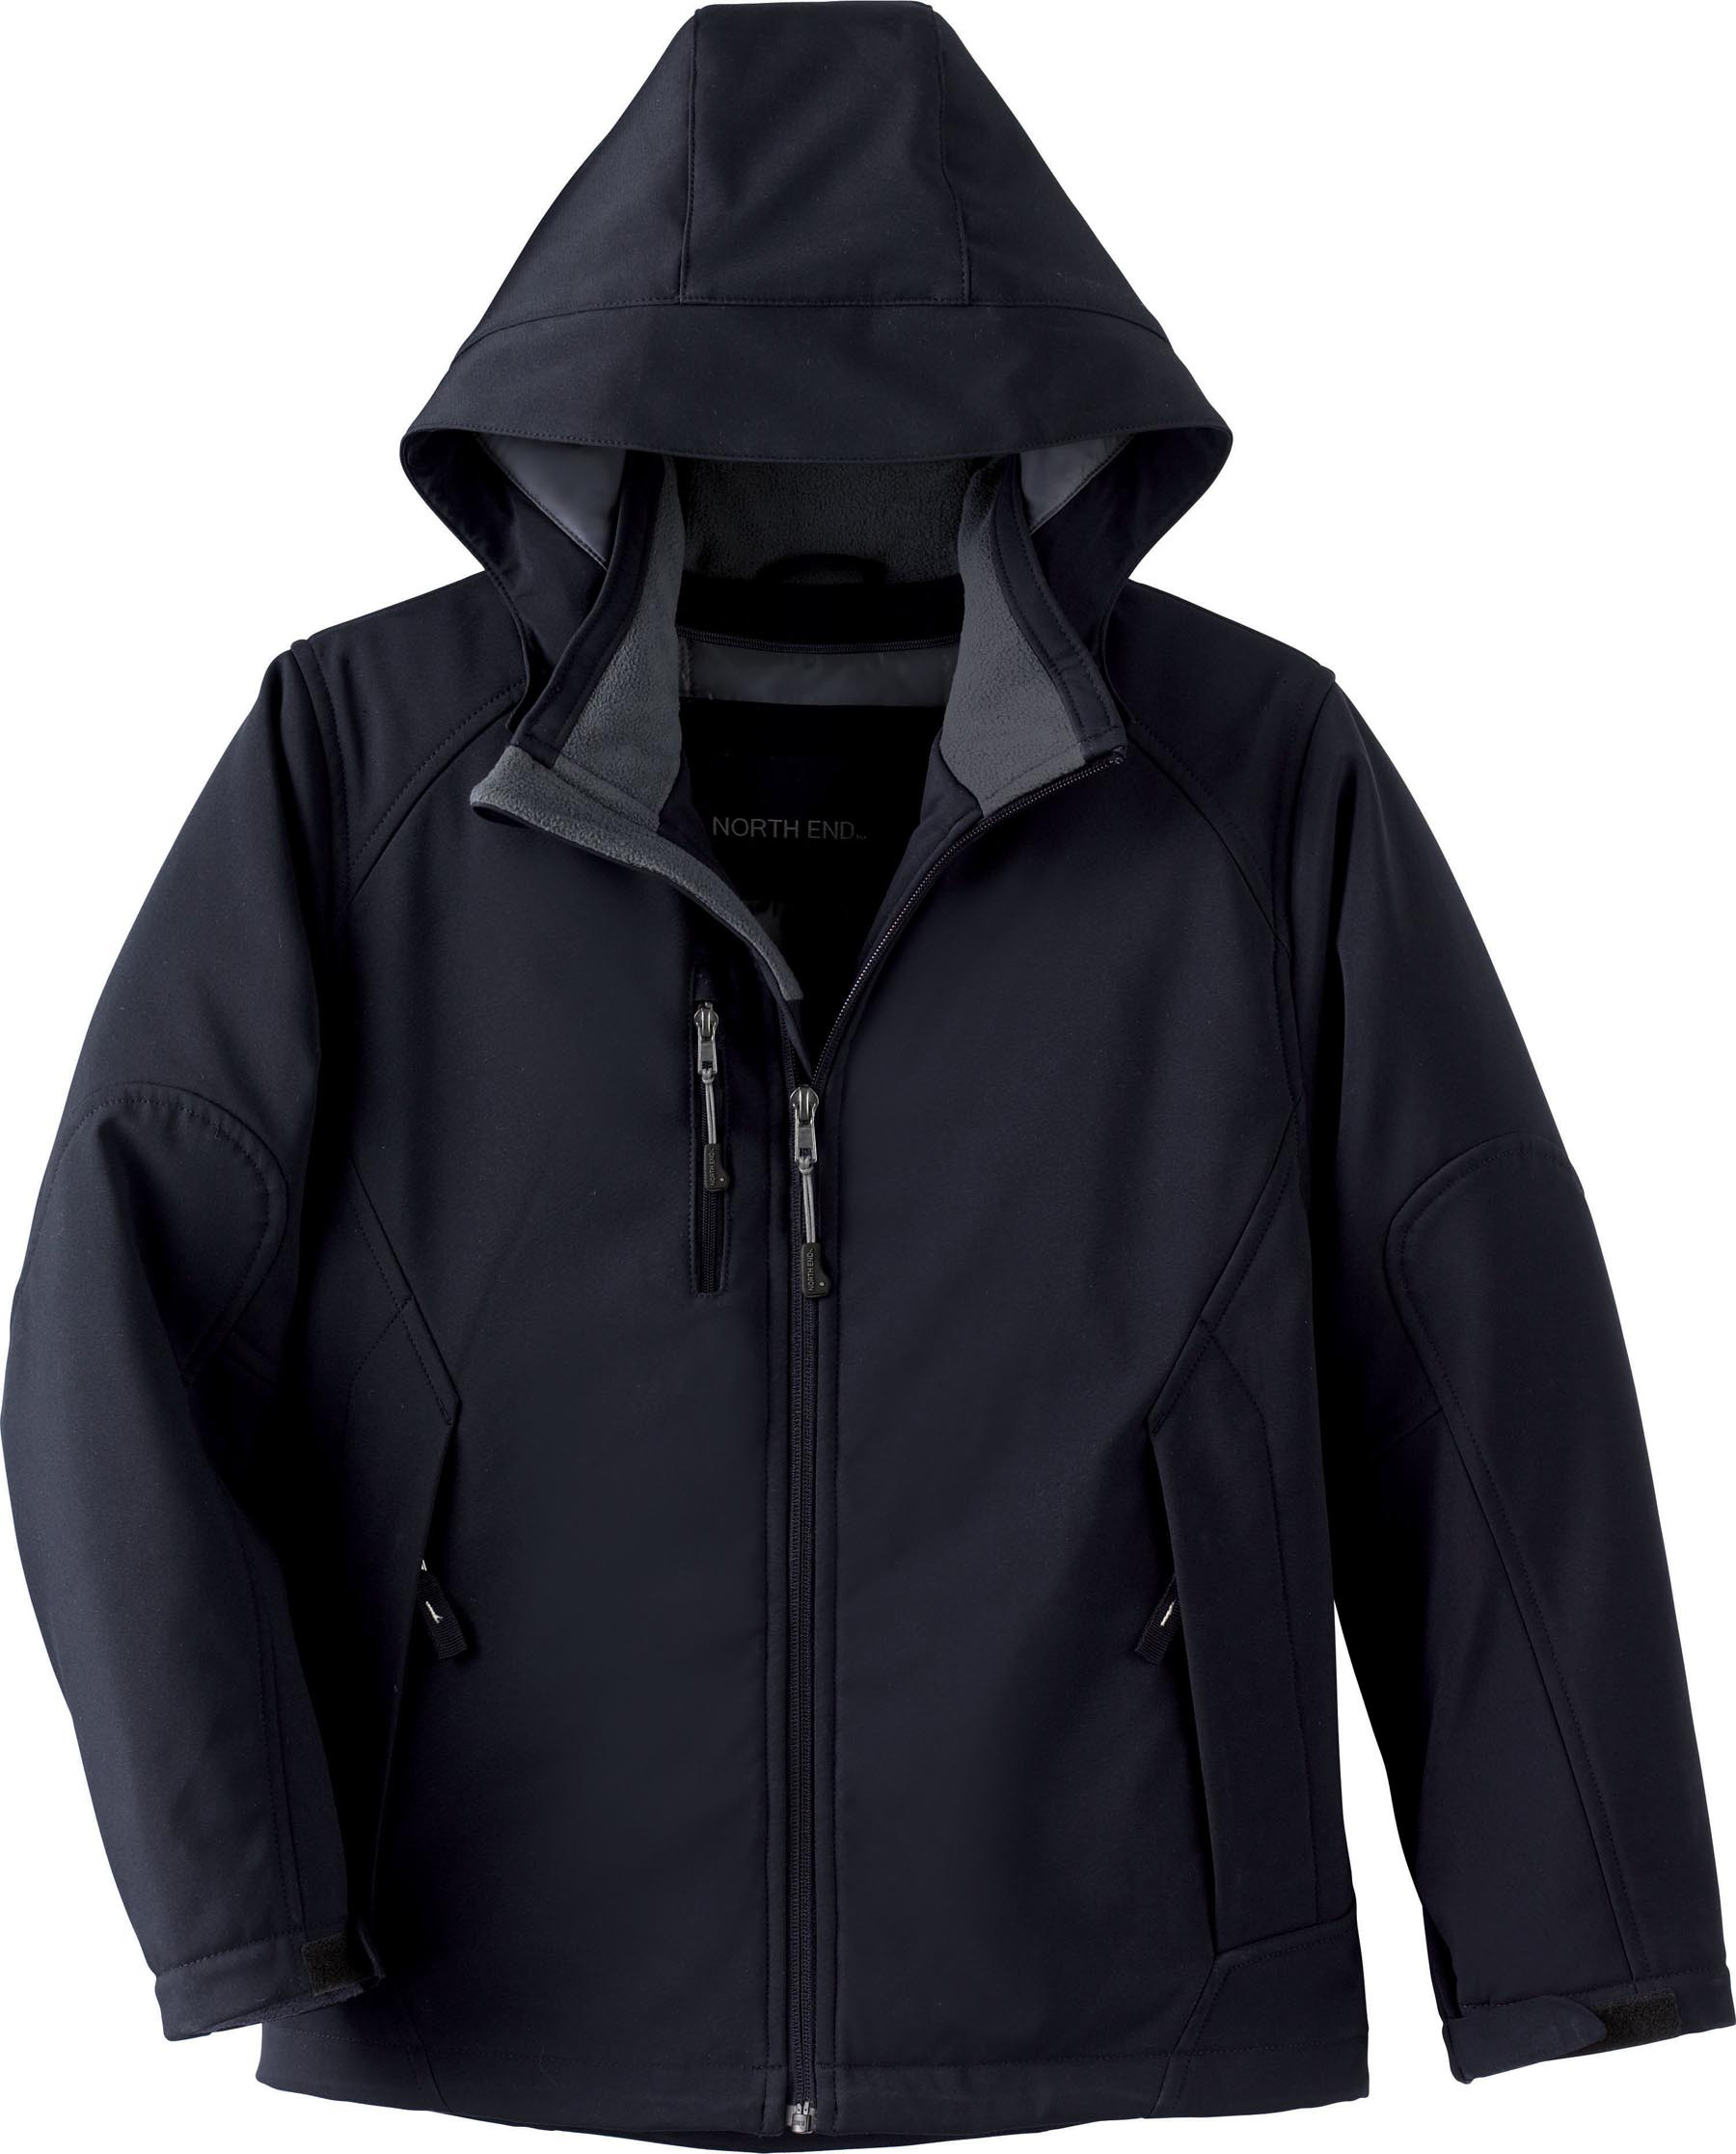 Ash City UTK 3 Warm.Logik 68010 - Glacier Youth Insulated Soft Shell Jacket With Detachable Hood